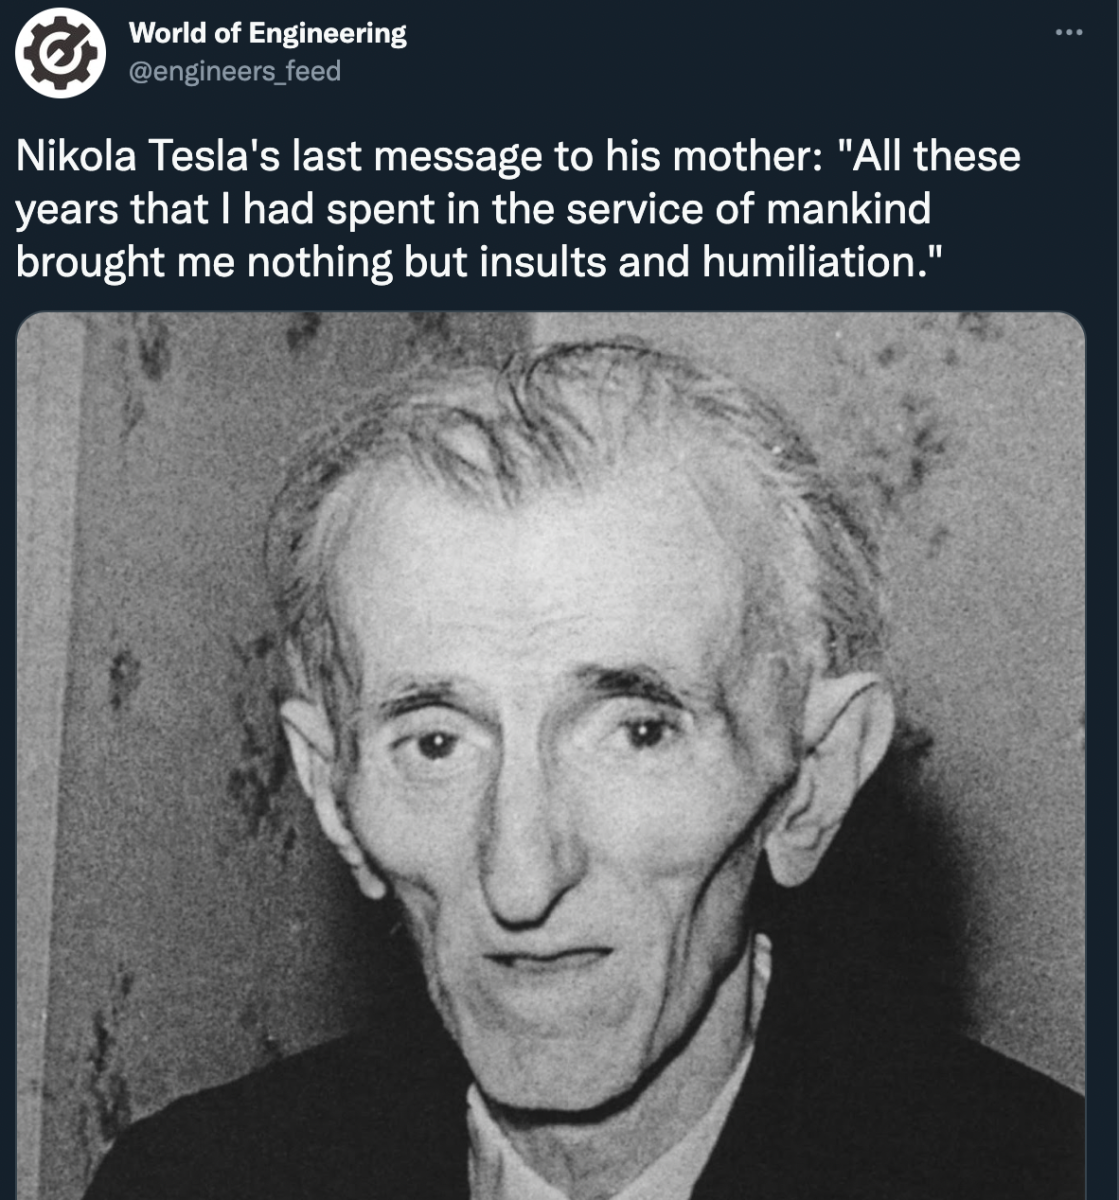 Nikola Tesla’s last words to his mother